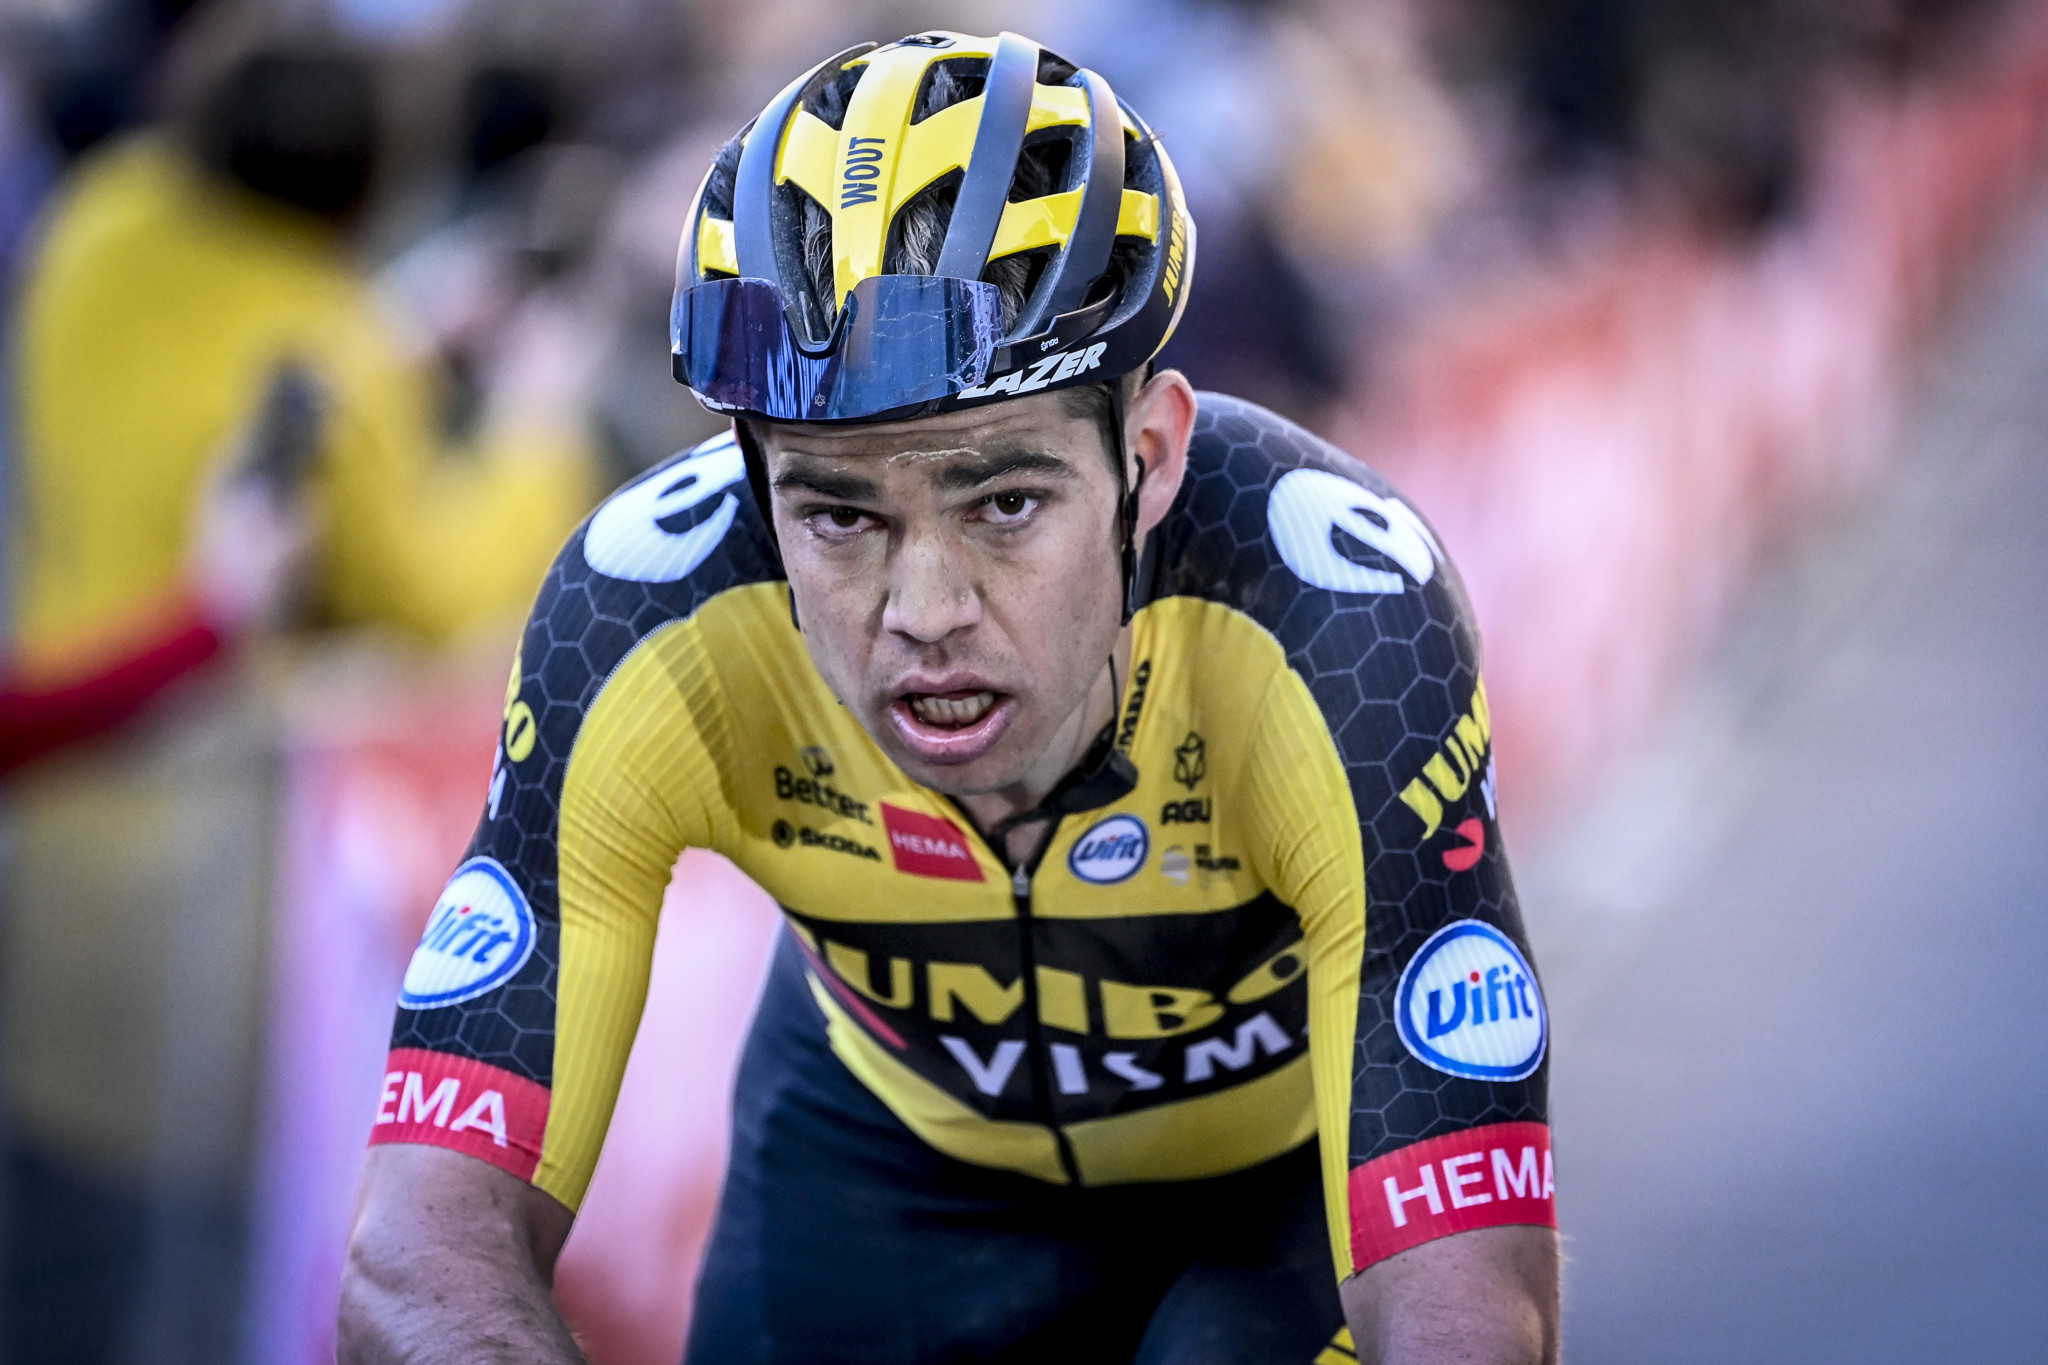 Belgian cyclist Van Aert wins stage one of Tirreno-Adriatico 